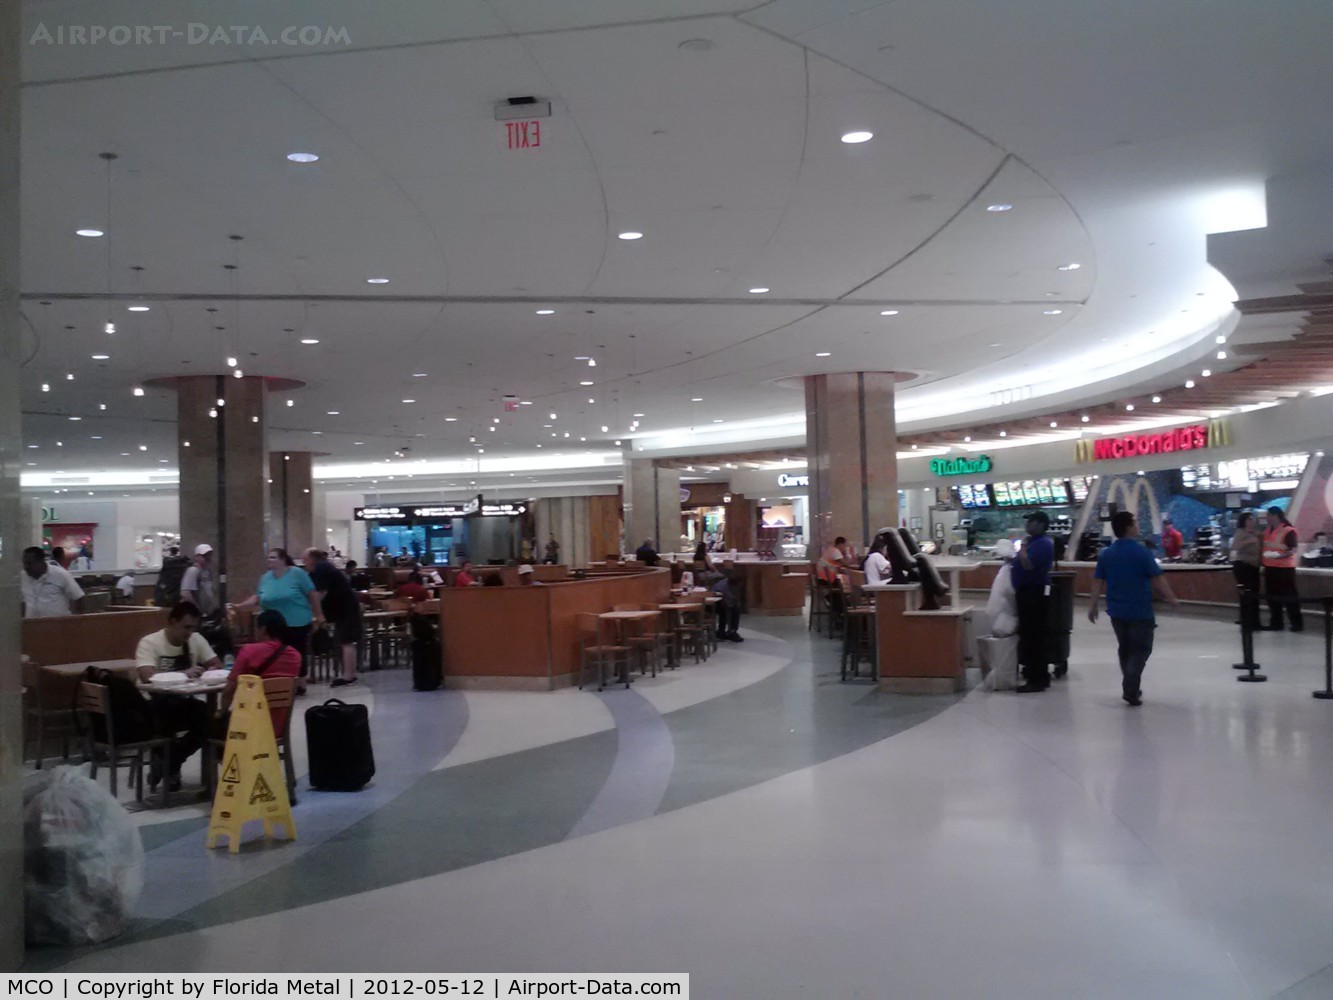 Orlando International Airport (MCO) - Food court area of Orlando Airport